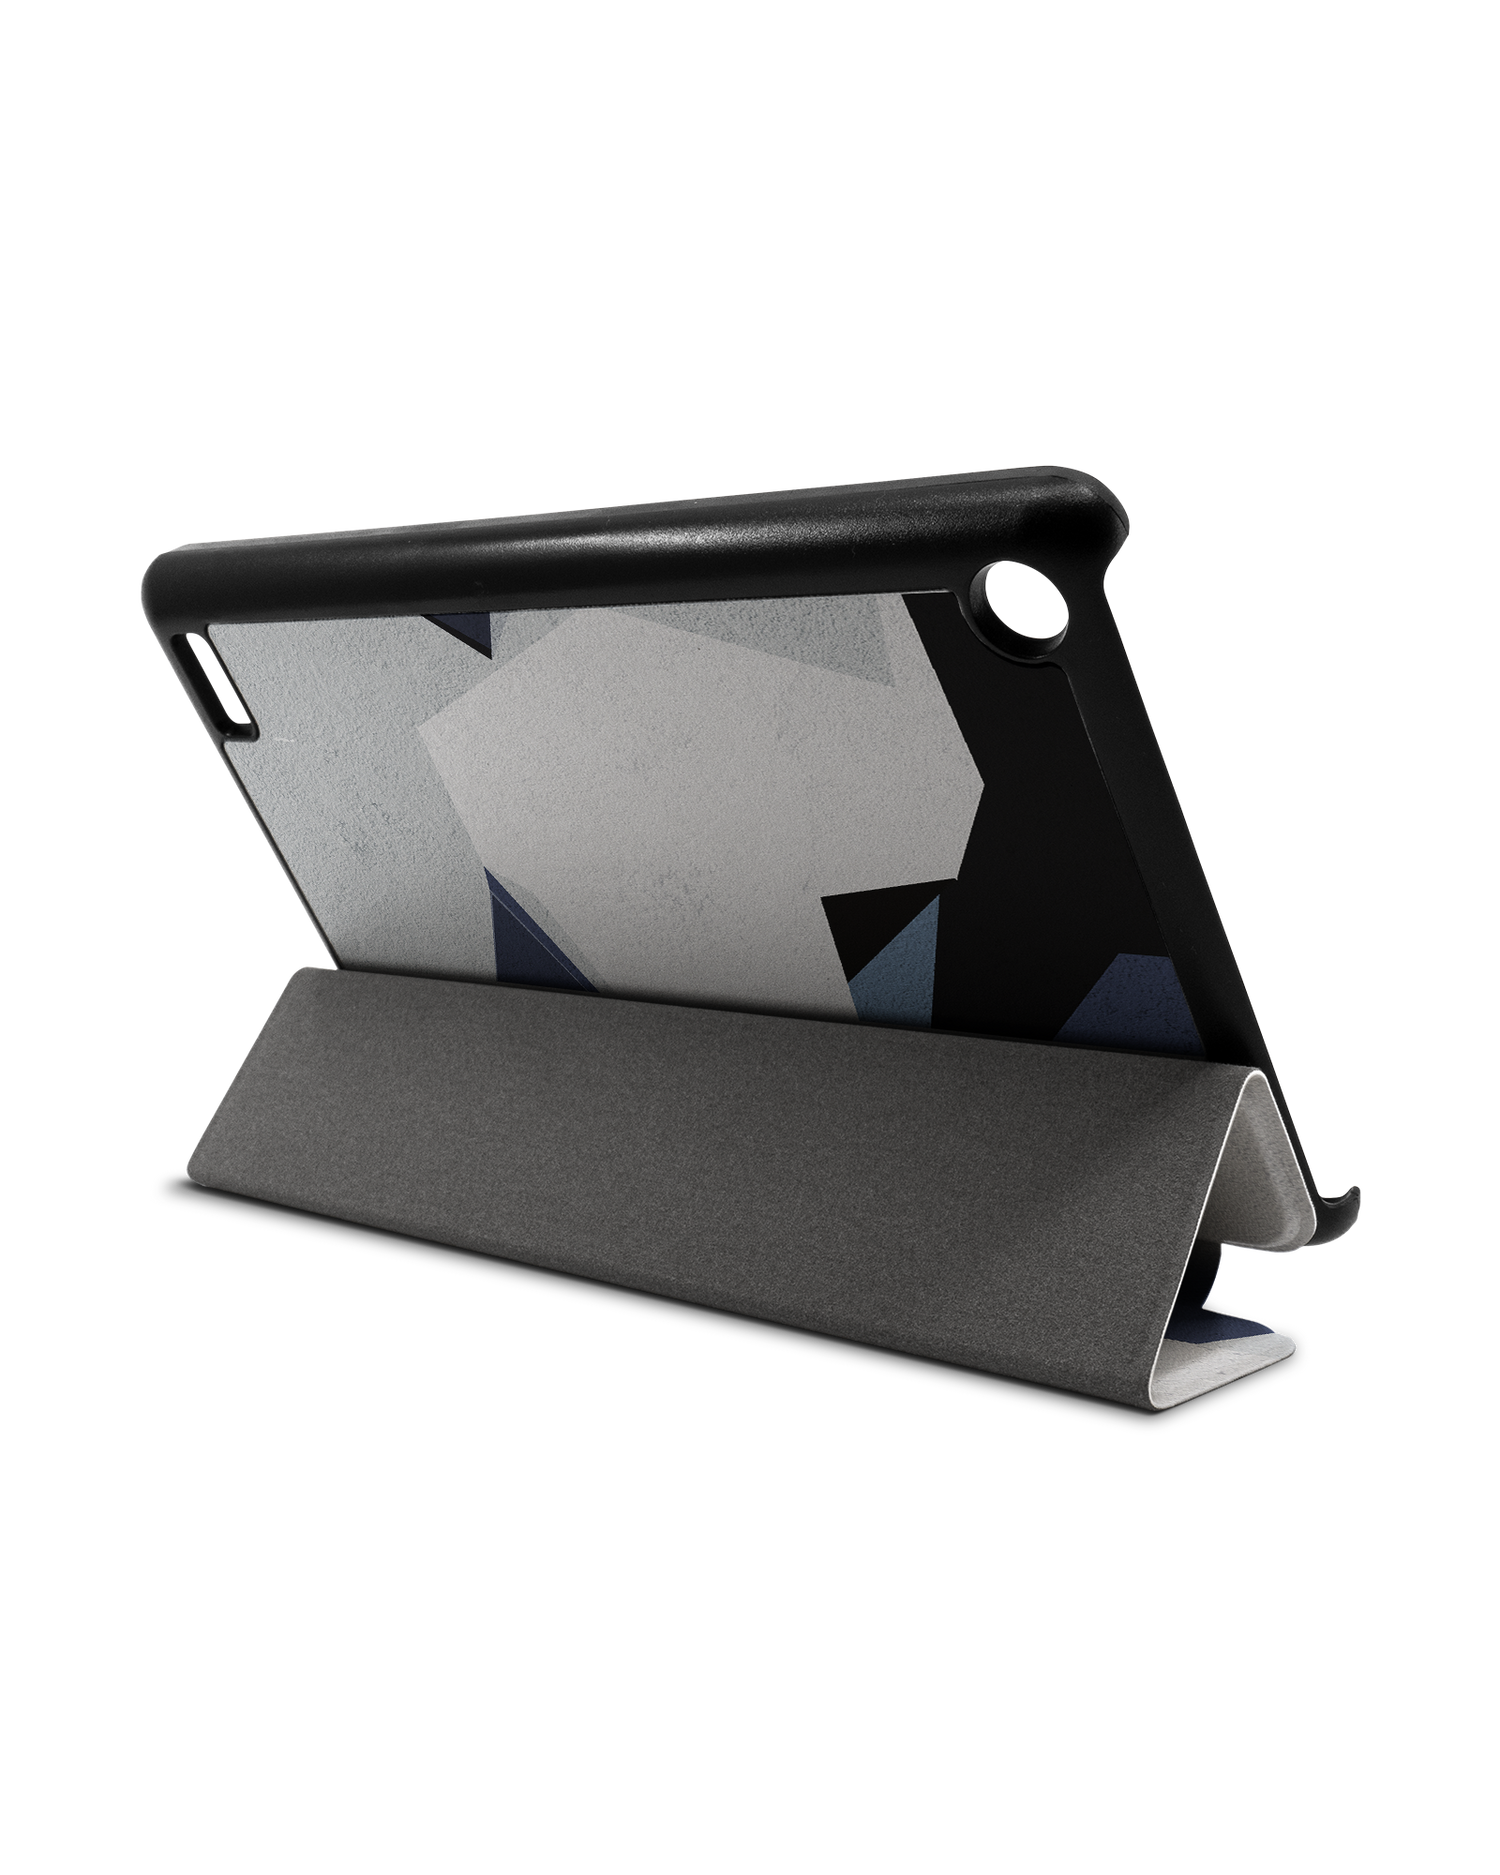 Geometric Camo Blue Tablet Smart Case für Amazon Fire 7: Aufgestellt im Querformat